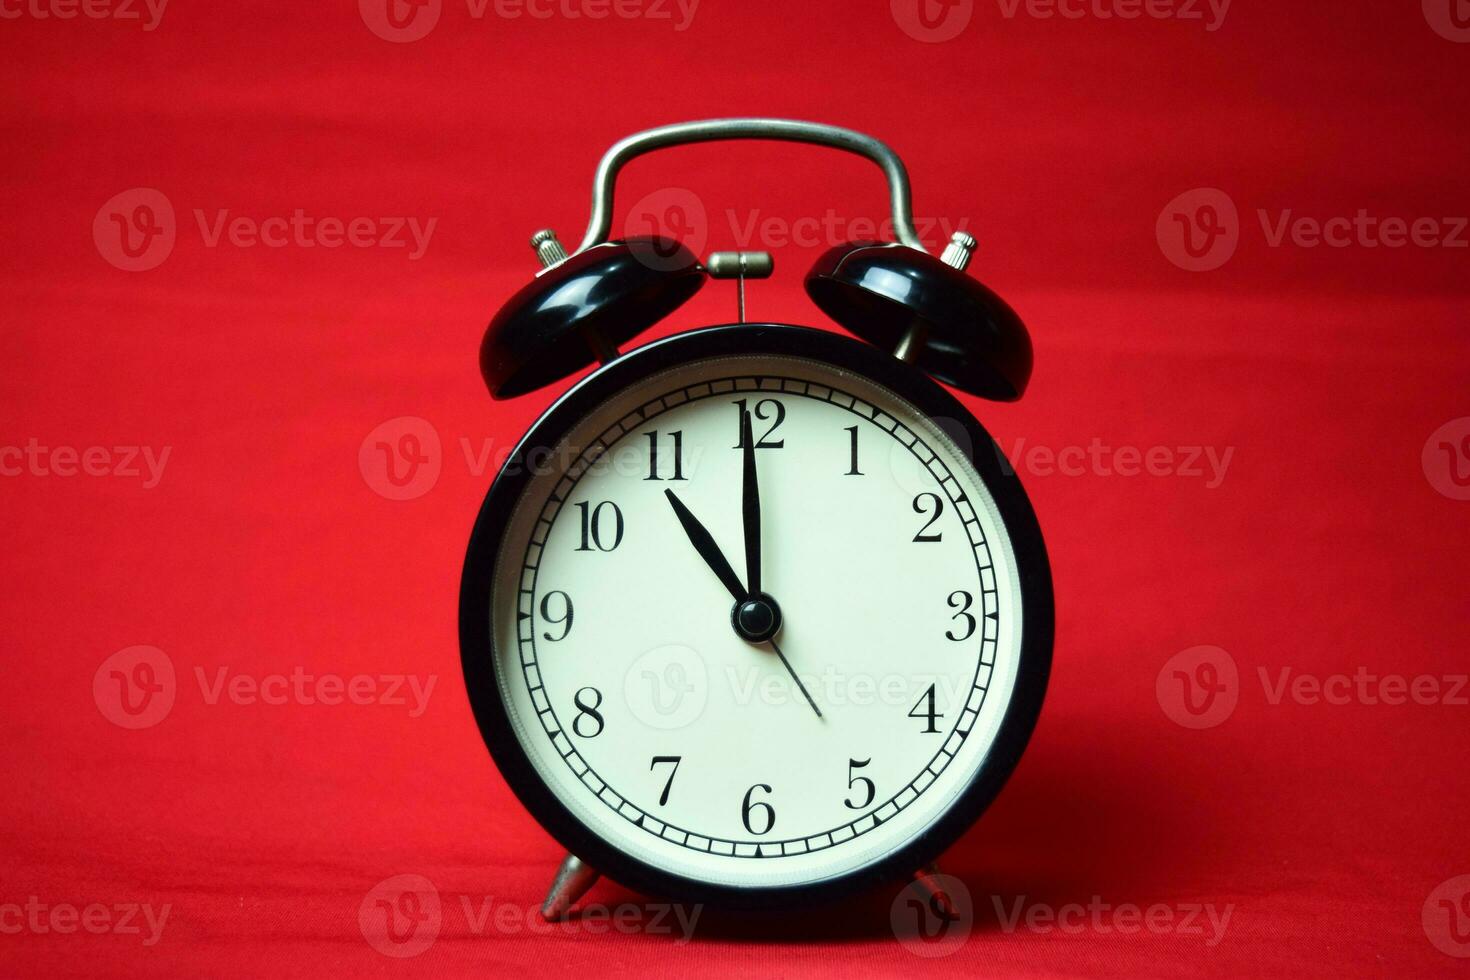 11 o clock,am,pm,arrow,axis,background,business,chronometer,circle,circular,clock,clockface,clockwise,clockwork,closeup,concept,countdown,detail,eleven,high photo